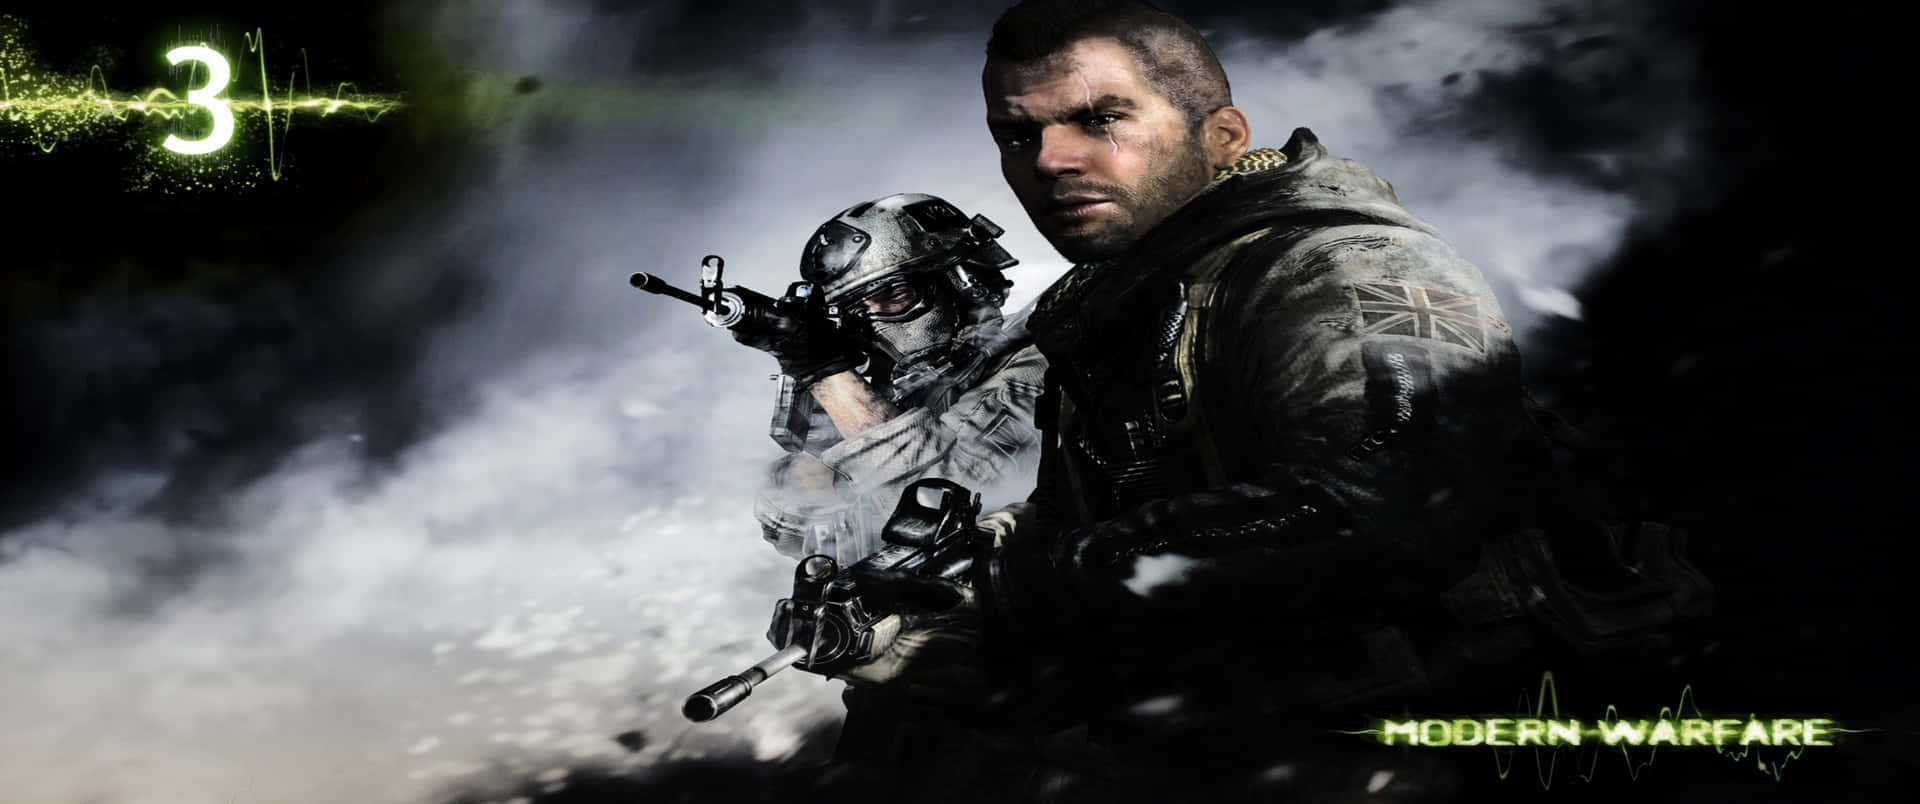 Download 3440x1440p Call Of Duty Modern Warfare Background 3440 X 1440 ...